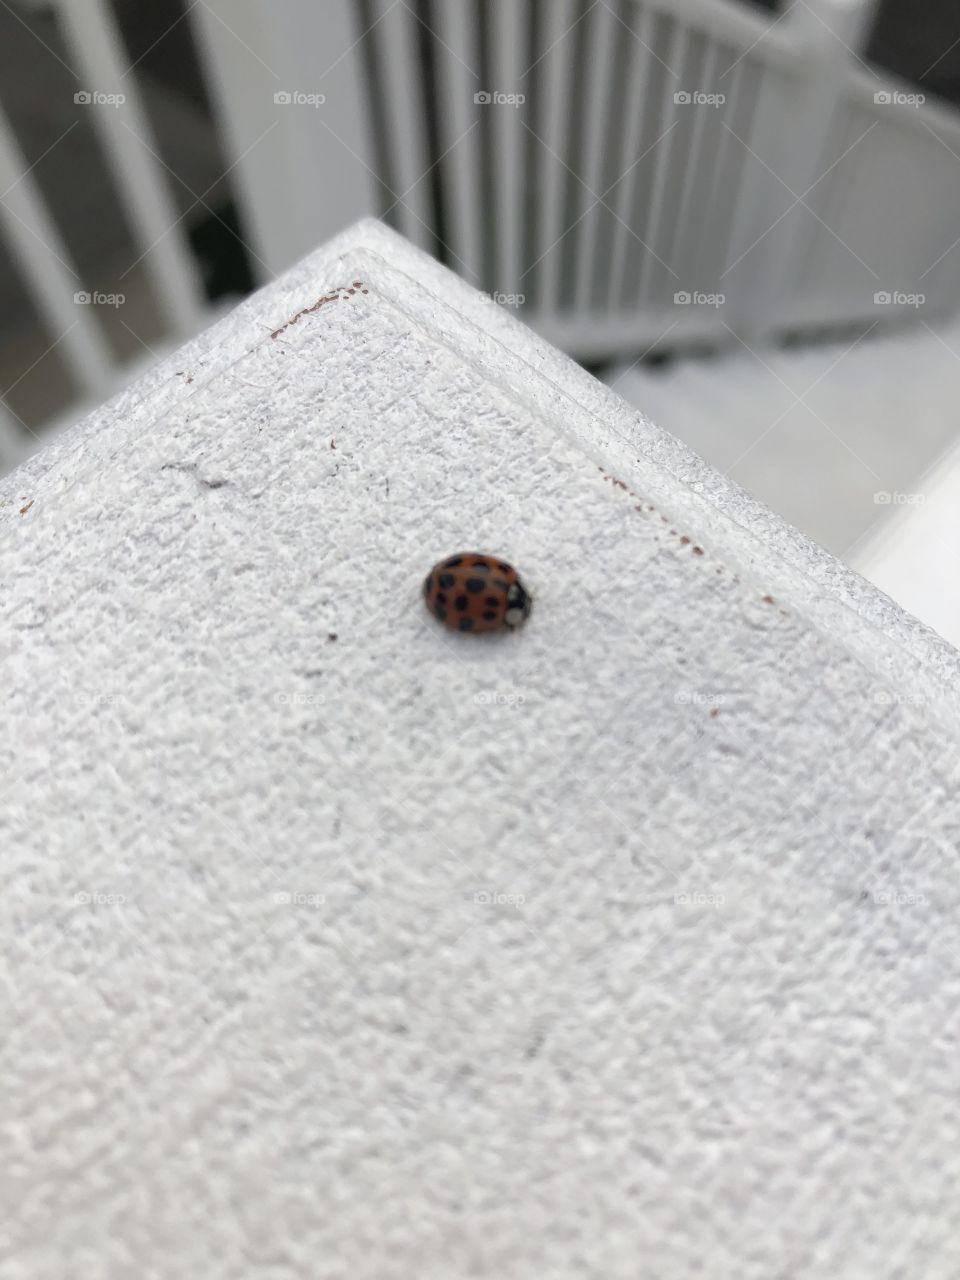 A beautiful Ladybug. Went outside to find this beautiful ladybug on my balcony. 